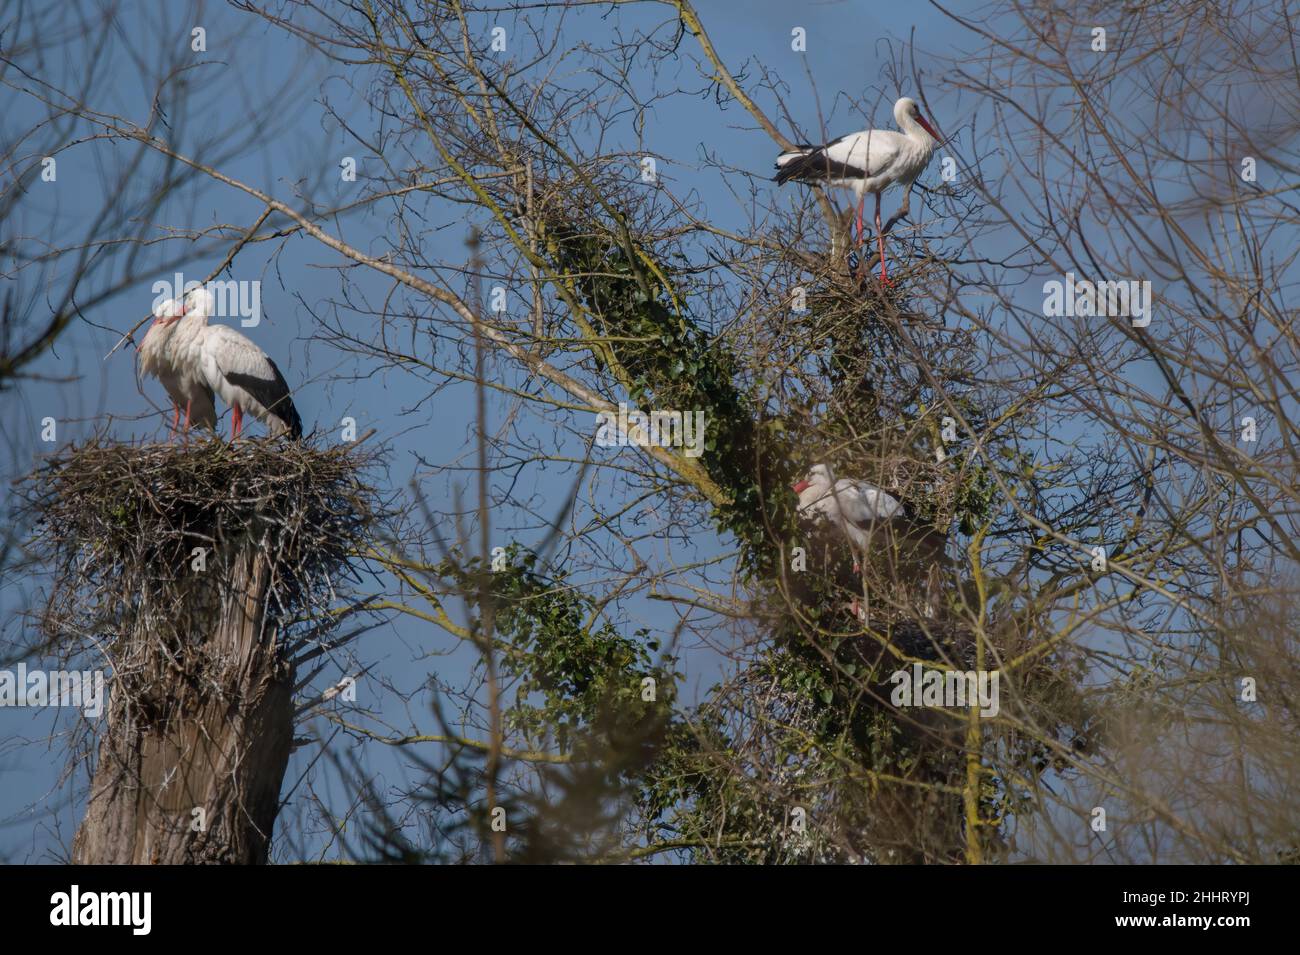 Cigognes en vol et nid en baie de Somme Foto Stock